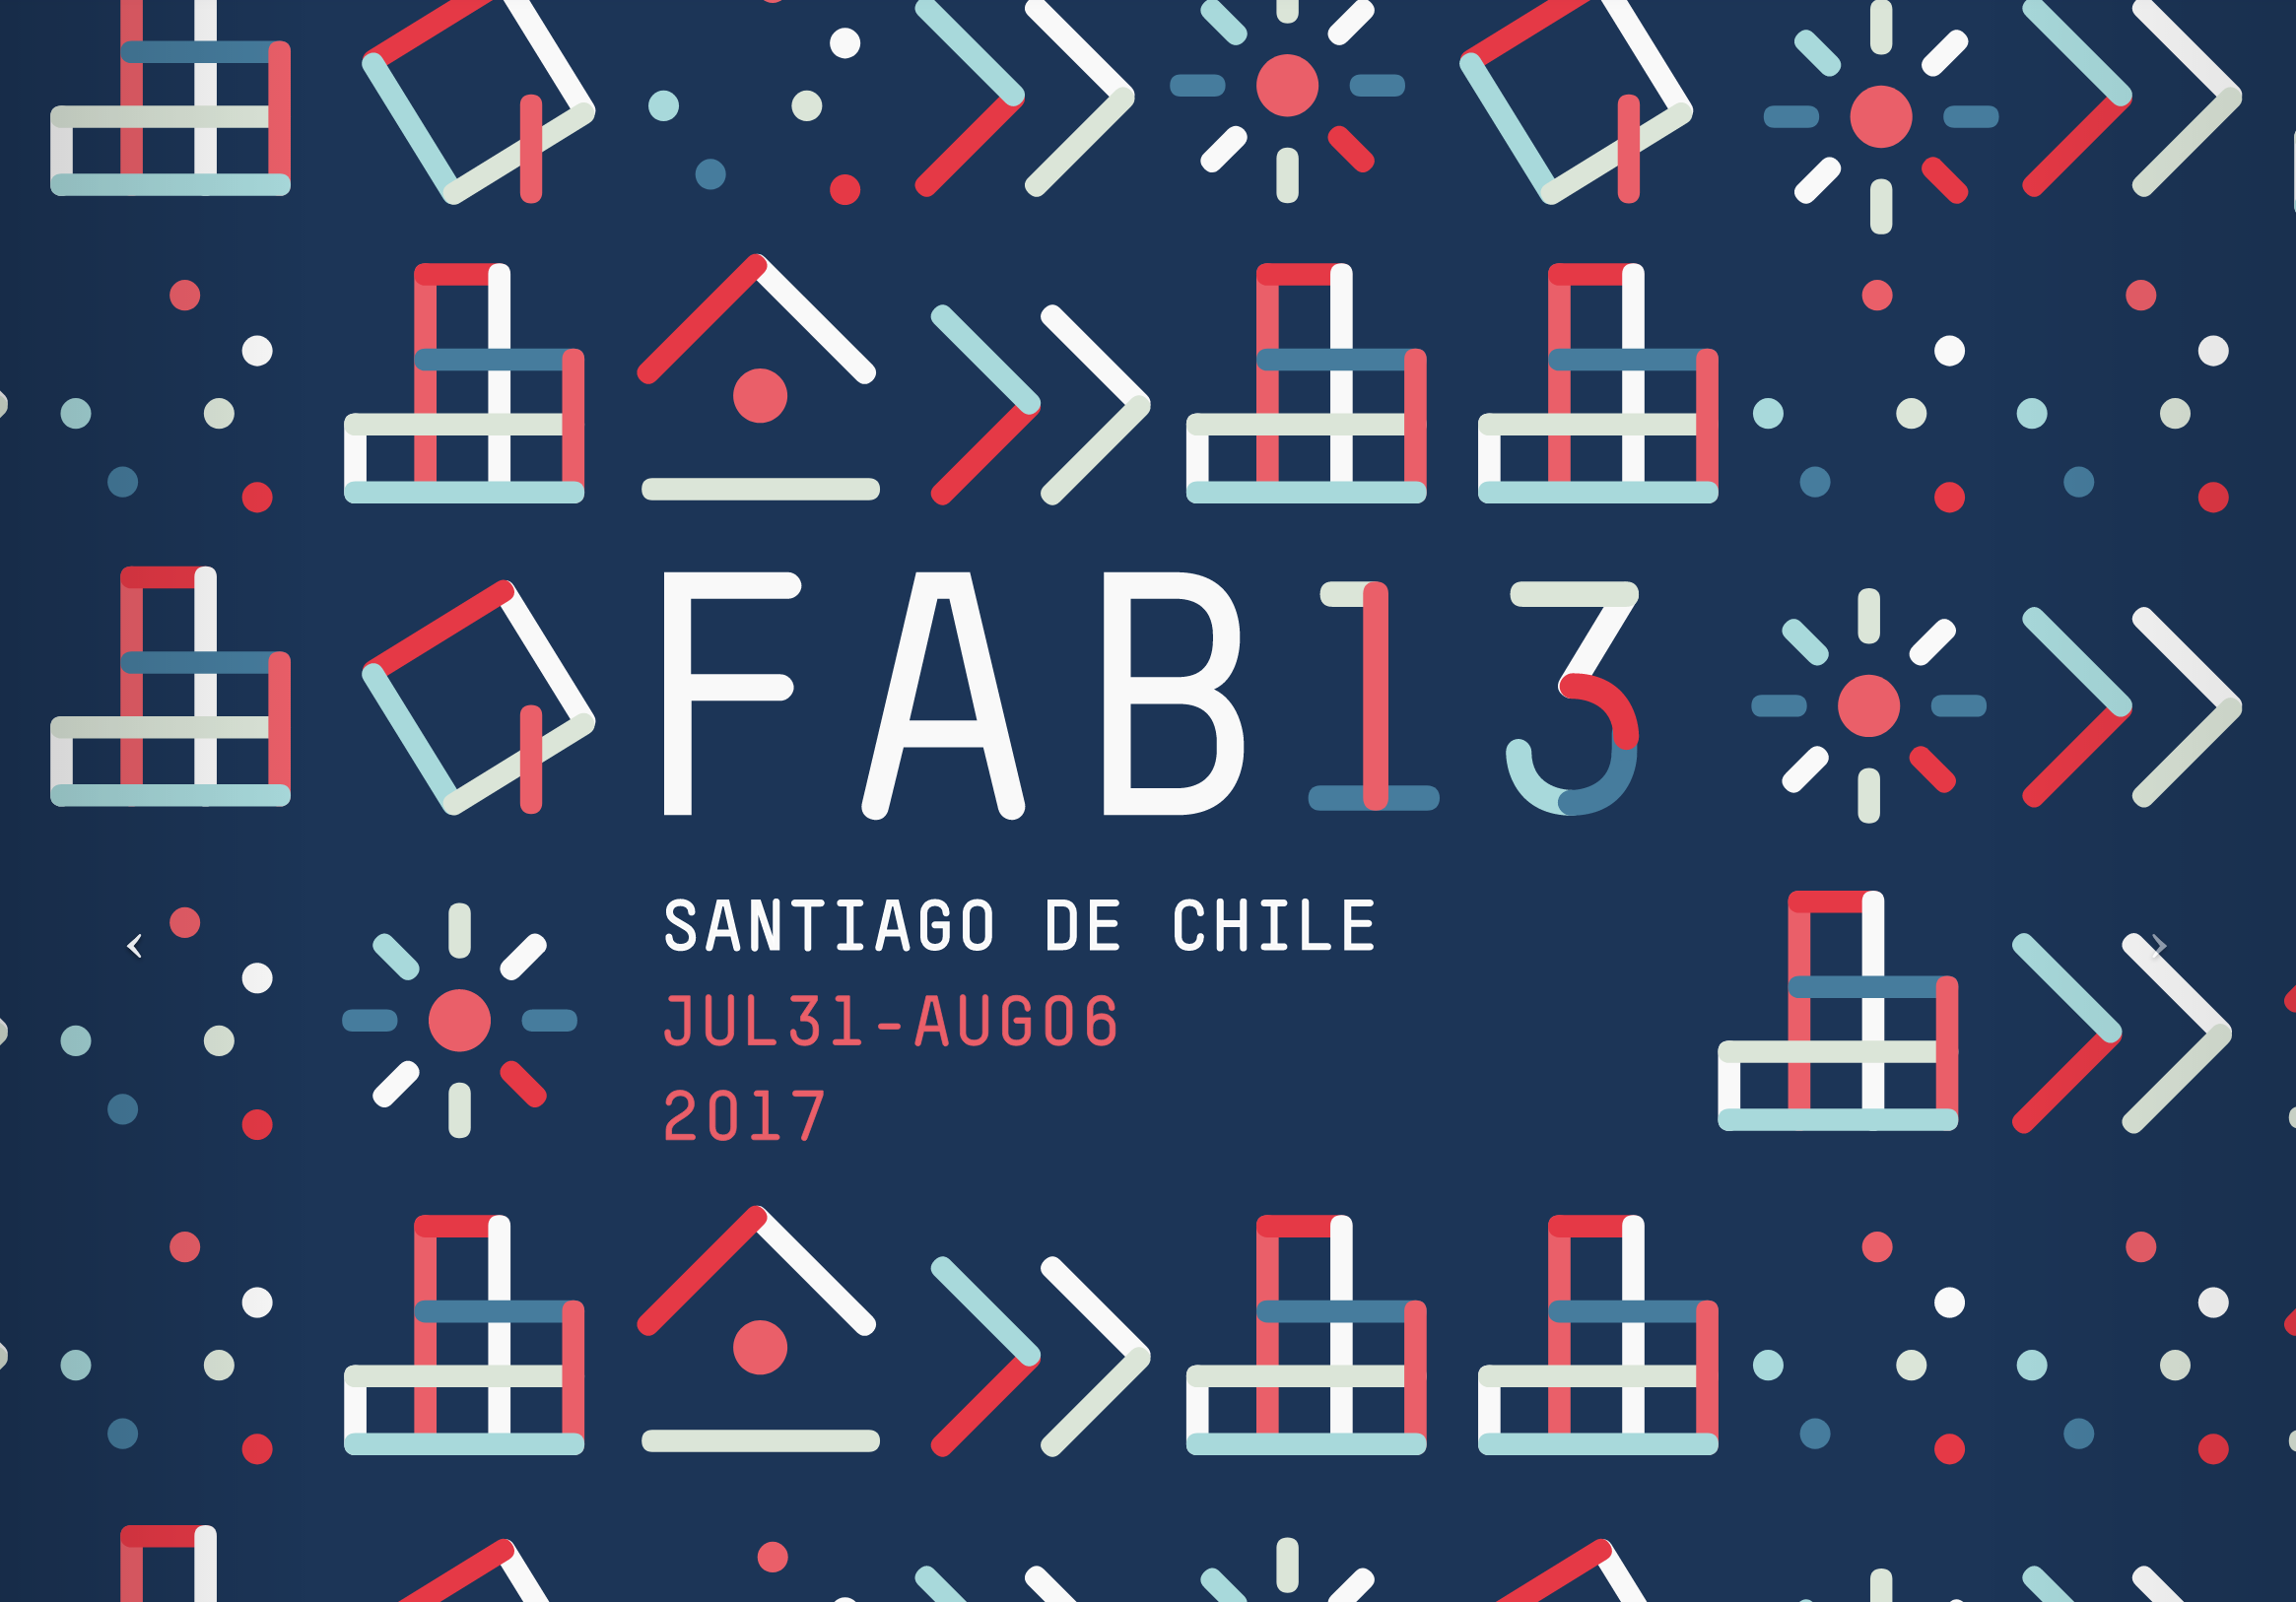 Fabricademy @ Fab 13 Santiago de Chile